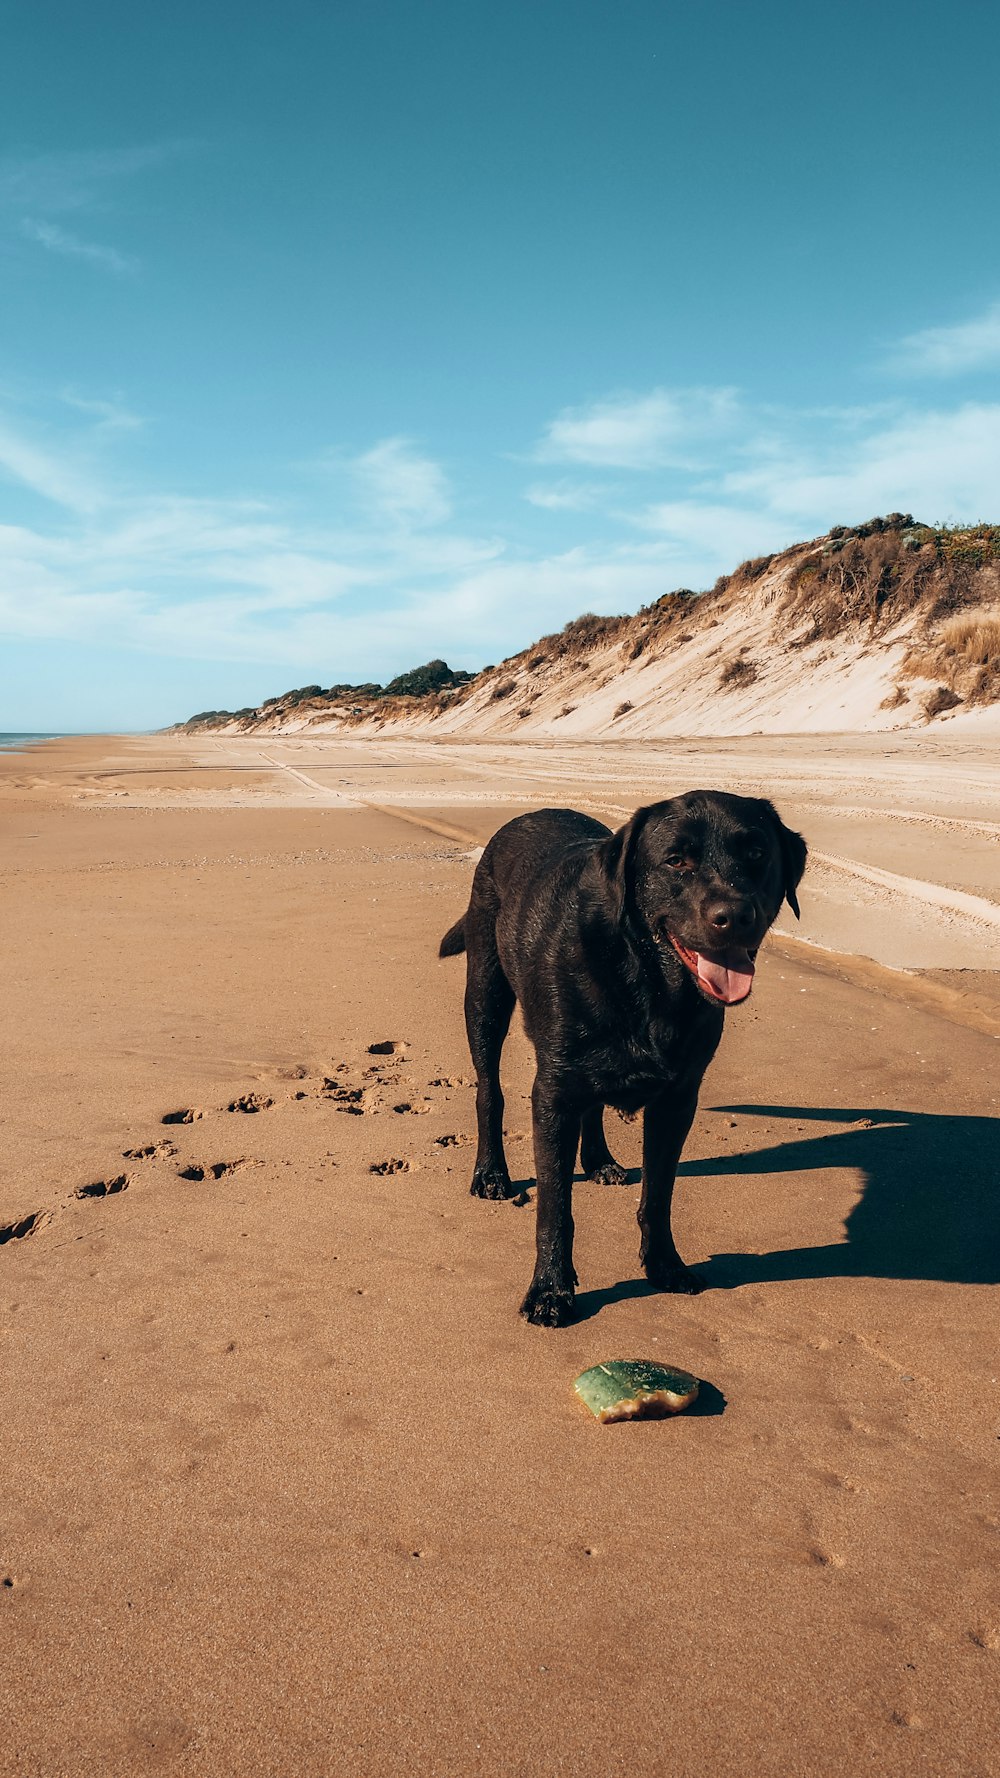 a dog standing on a sandy beach